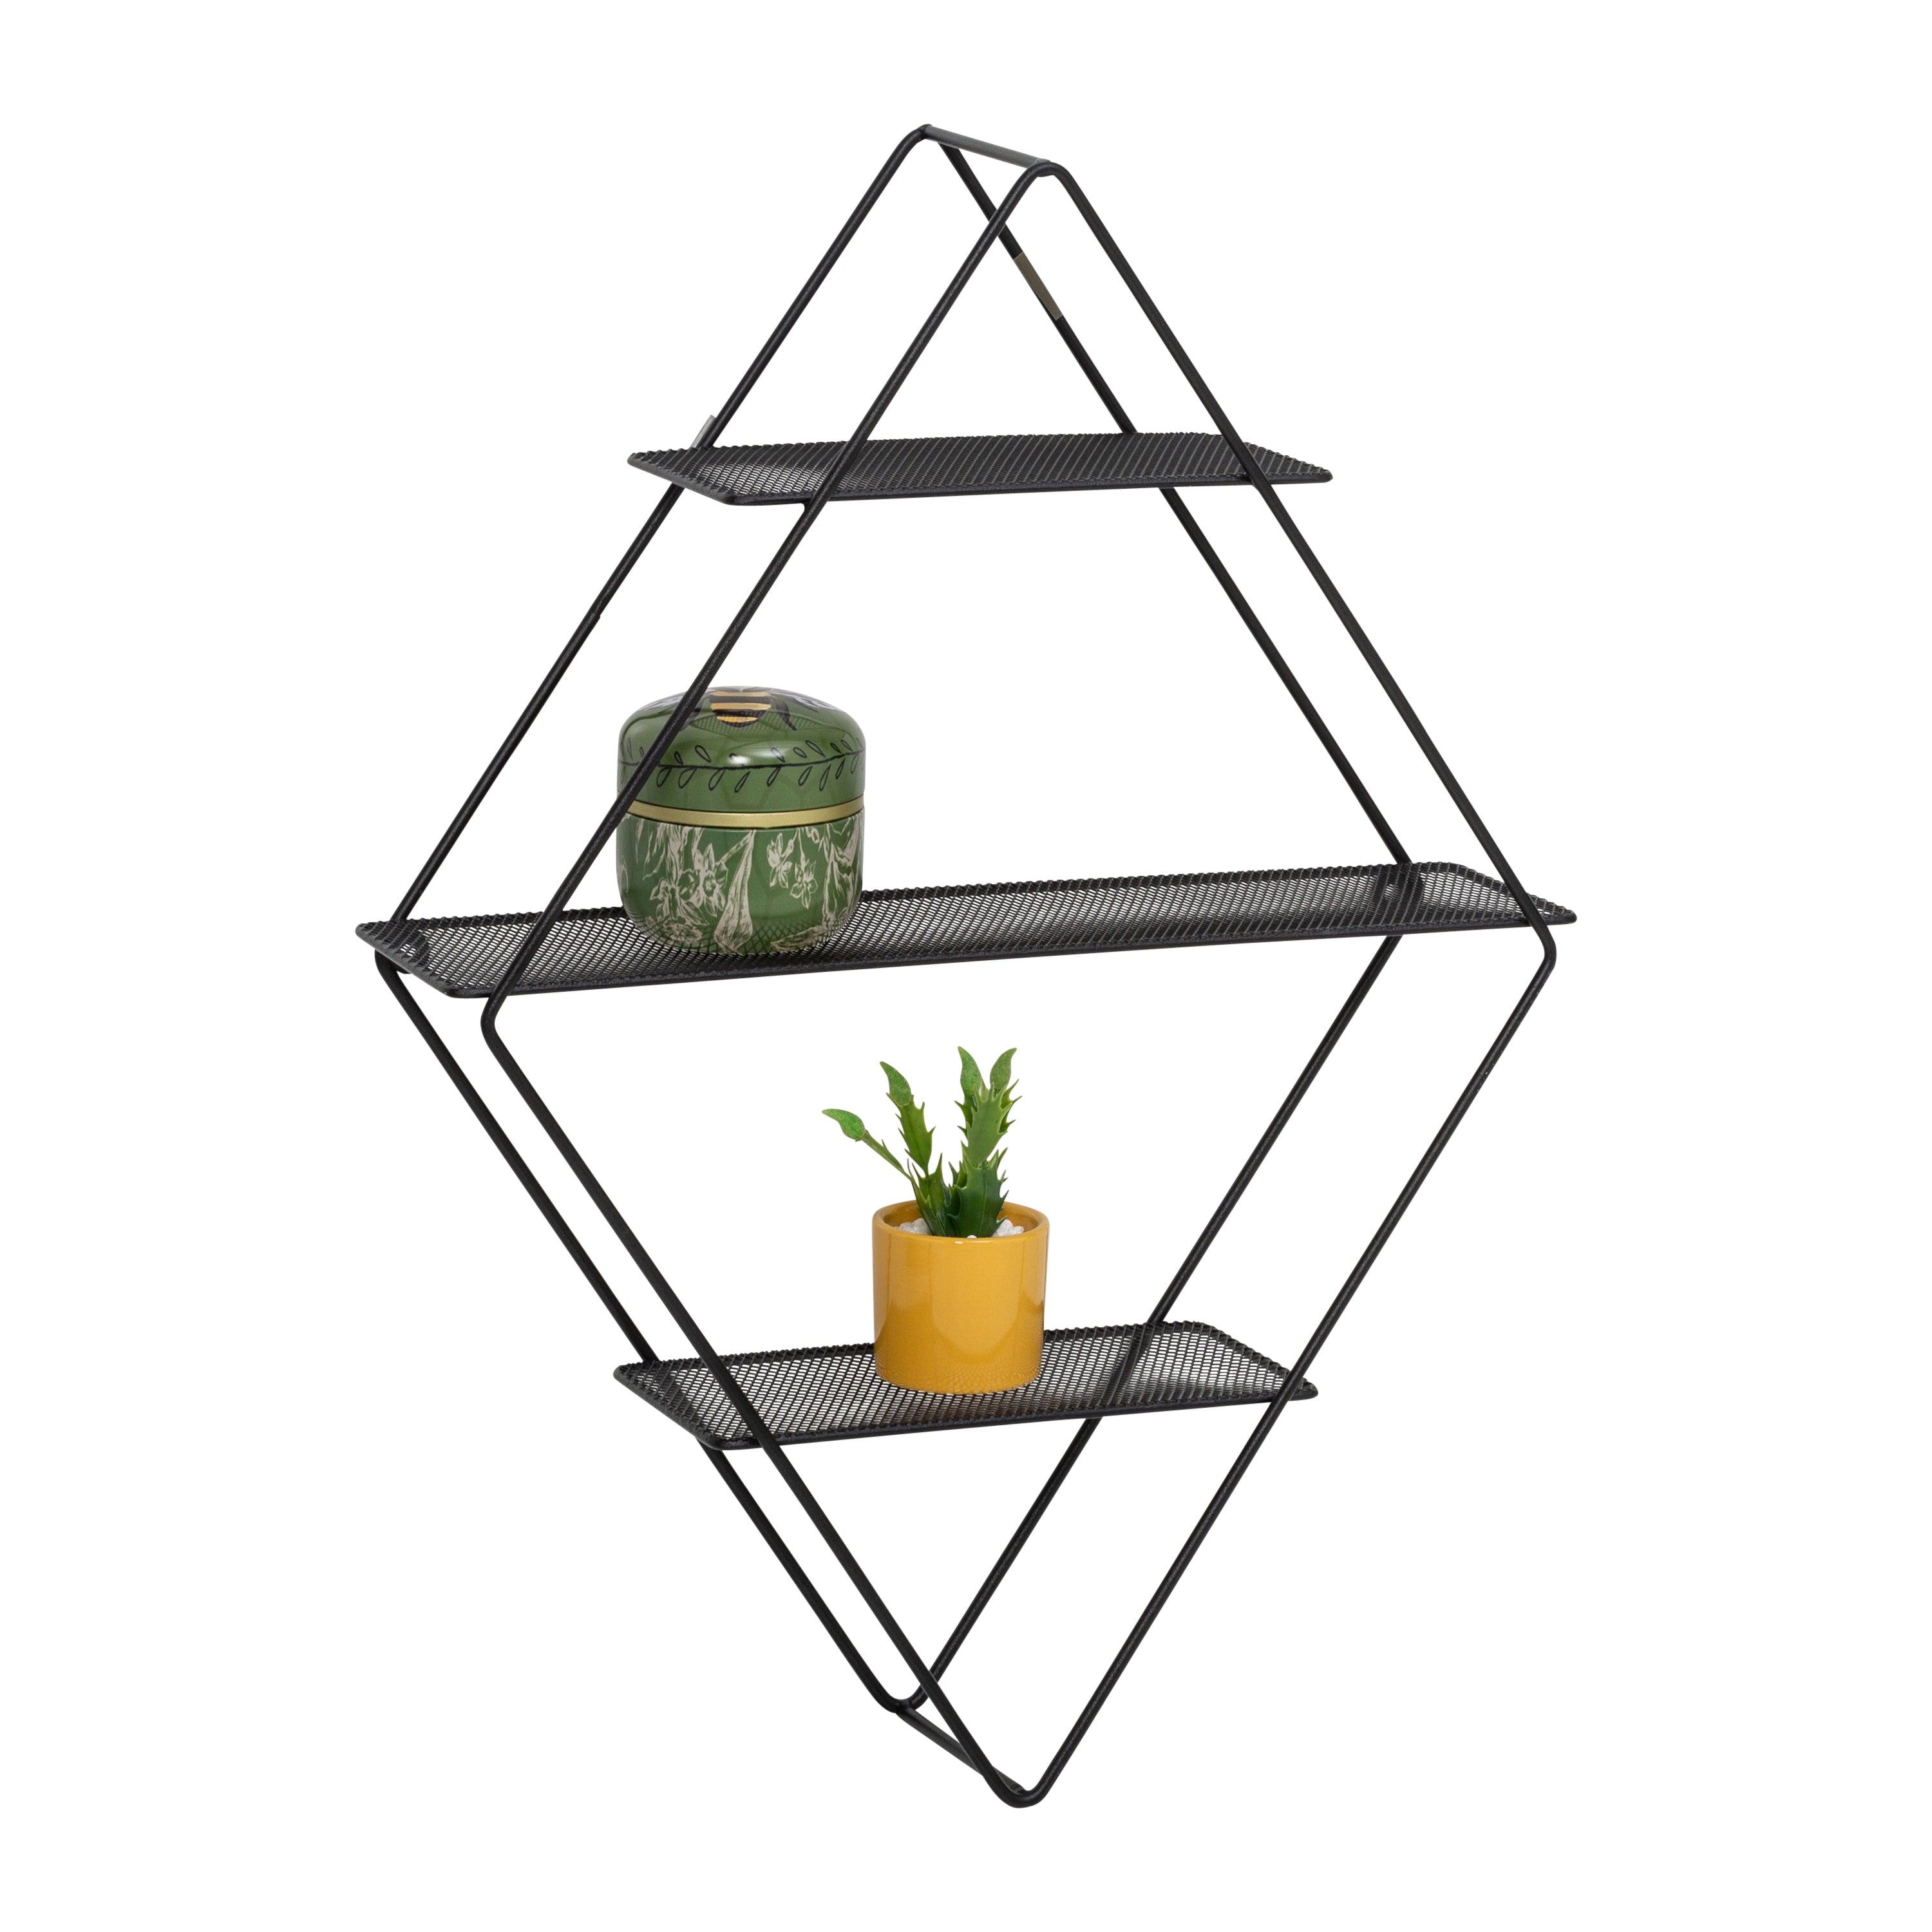 decorative metal shelf